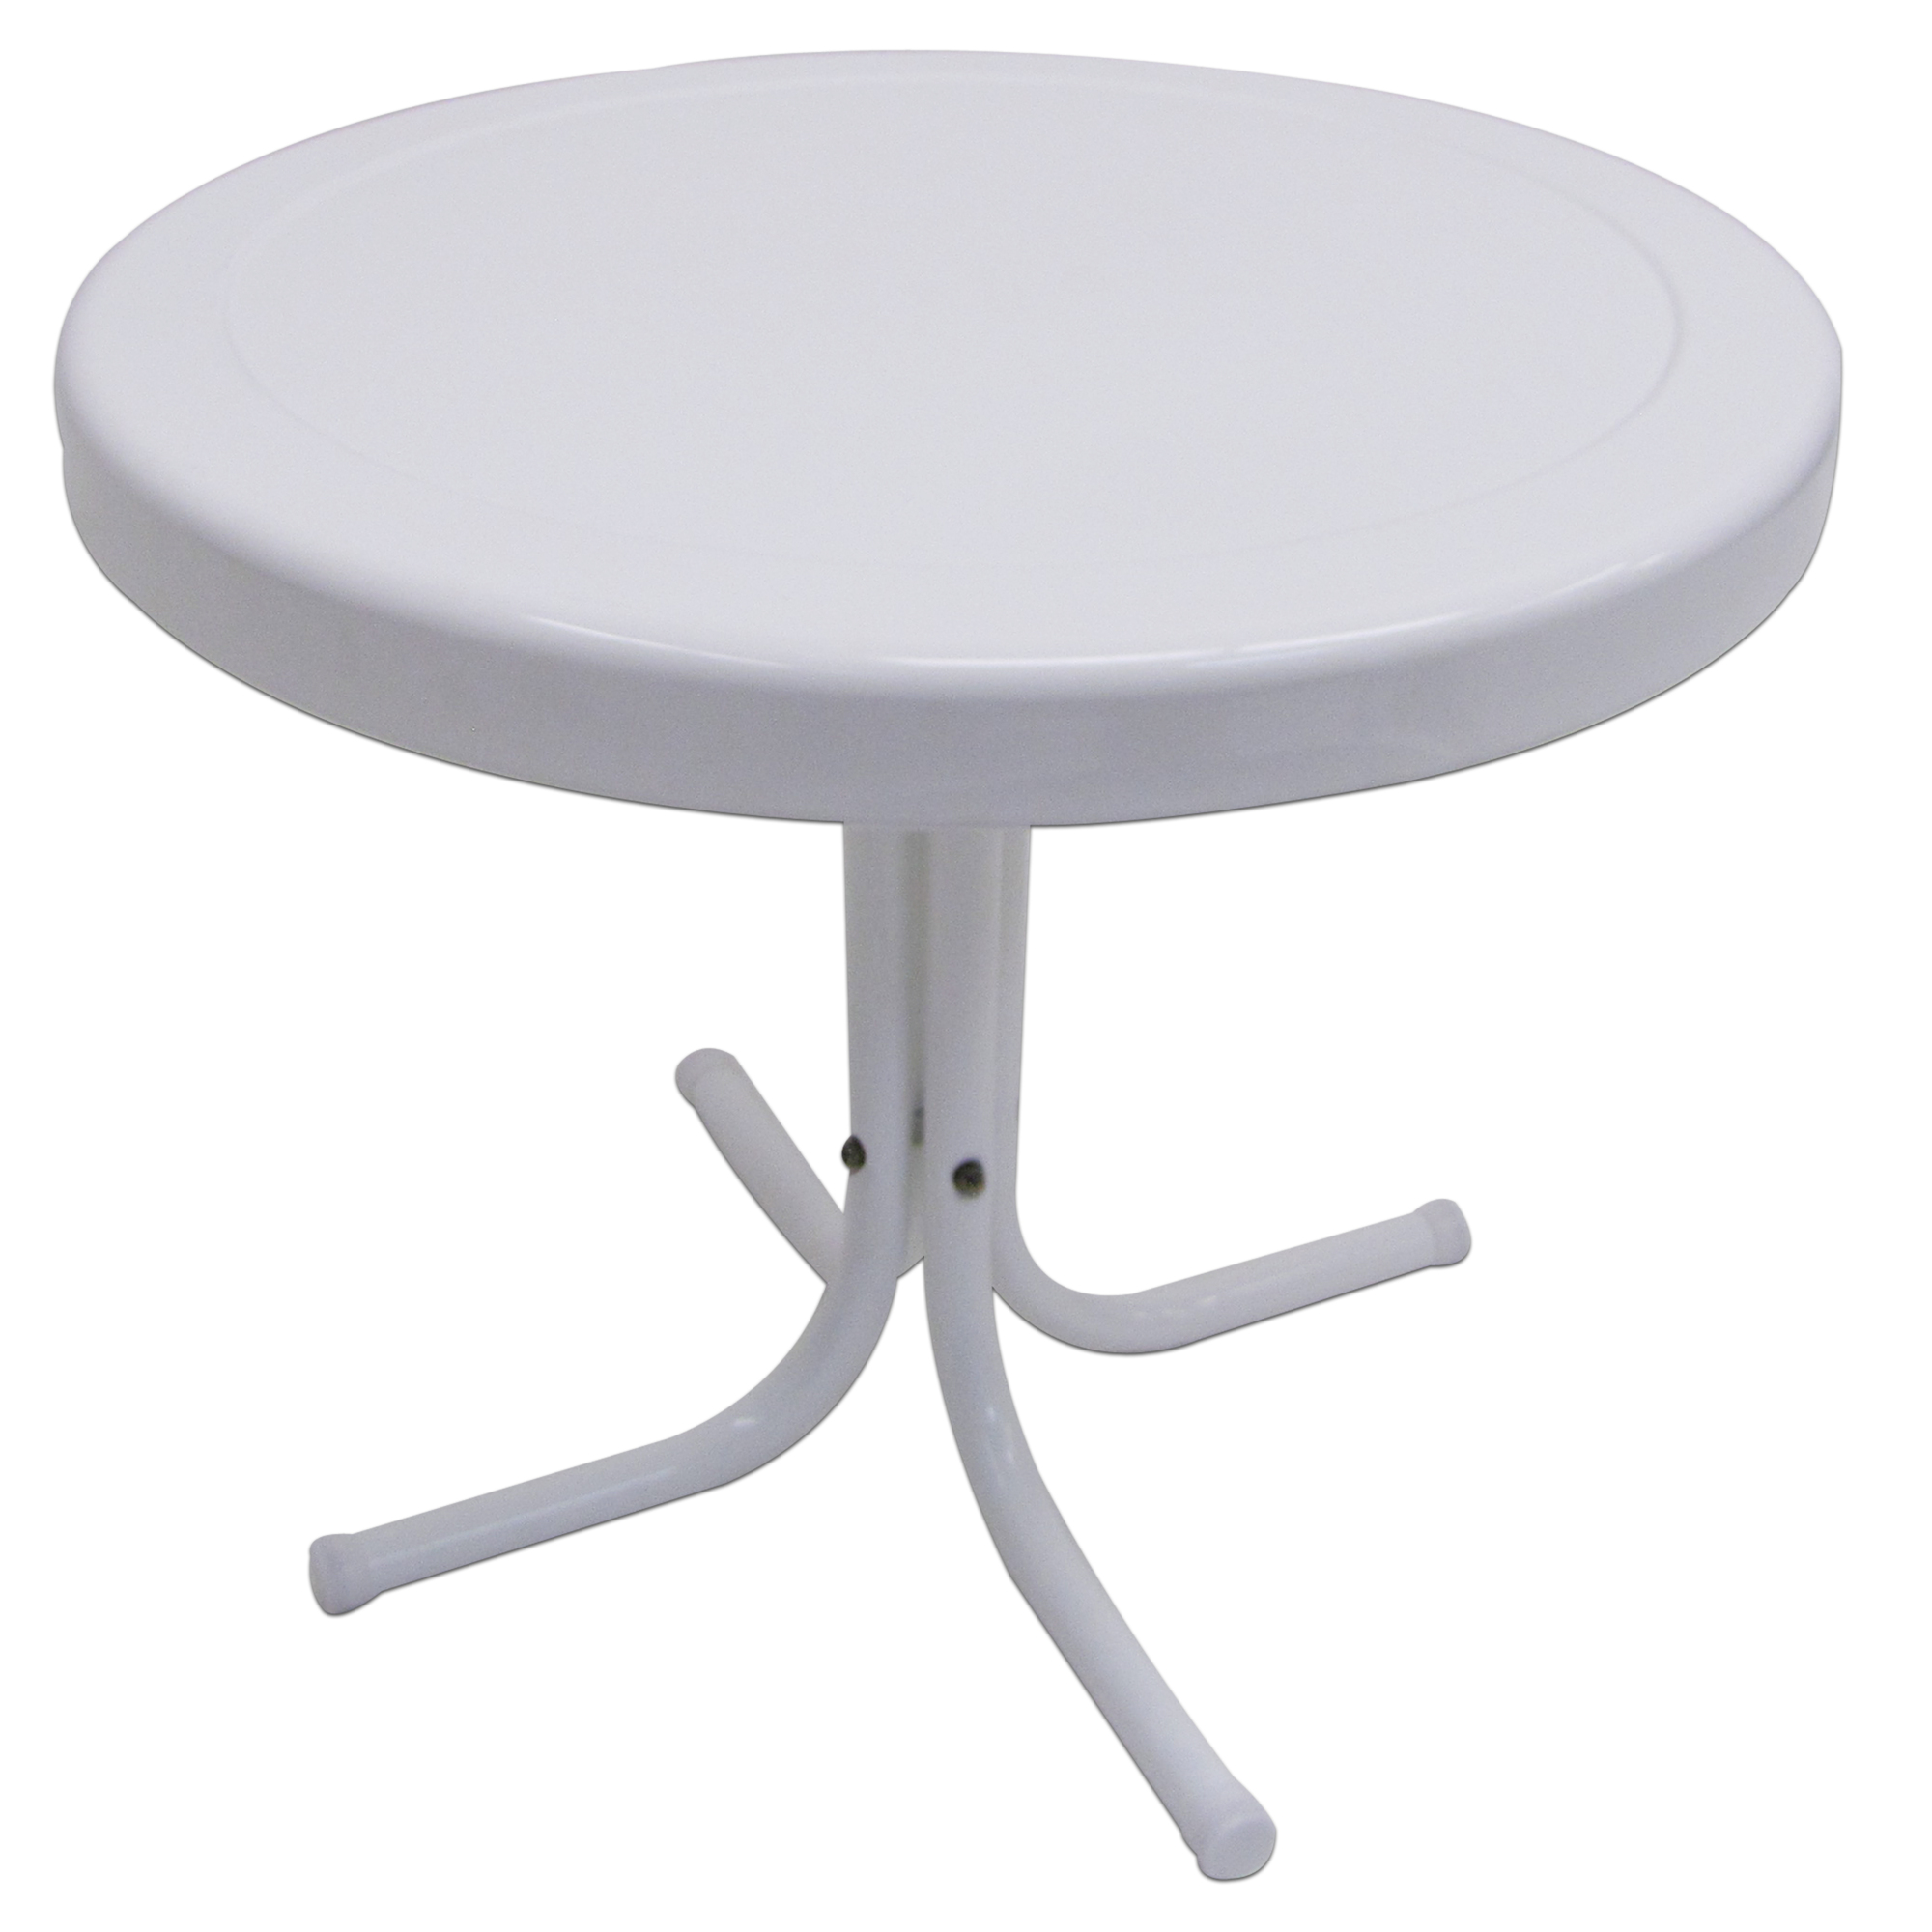 Retro Metal, Table Round, White, 19Inch, Model TX 93500